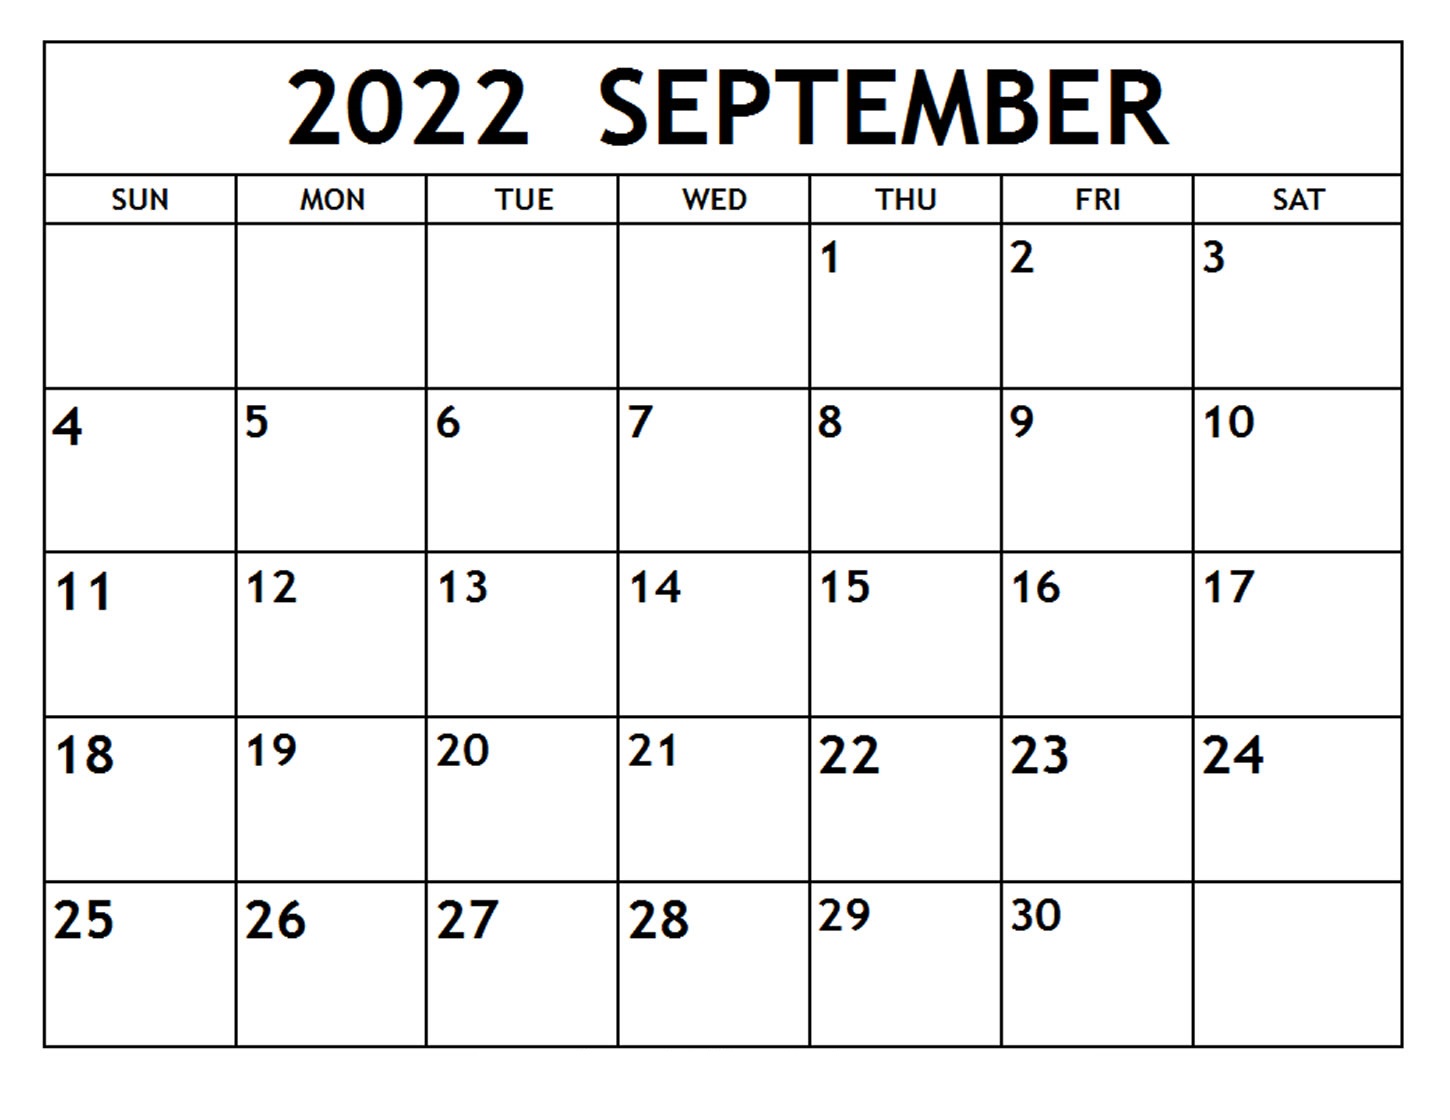 September 2022 Calendar With Holidays Template